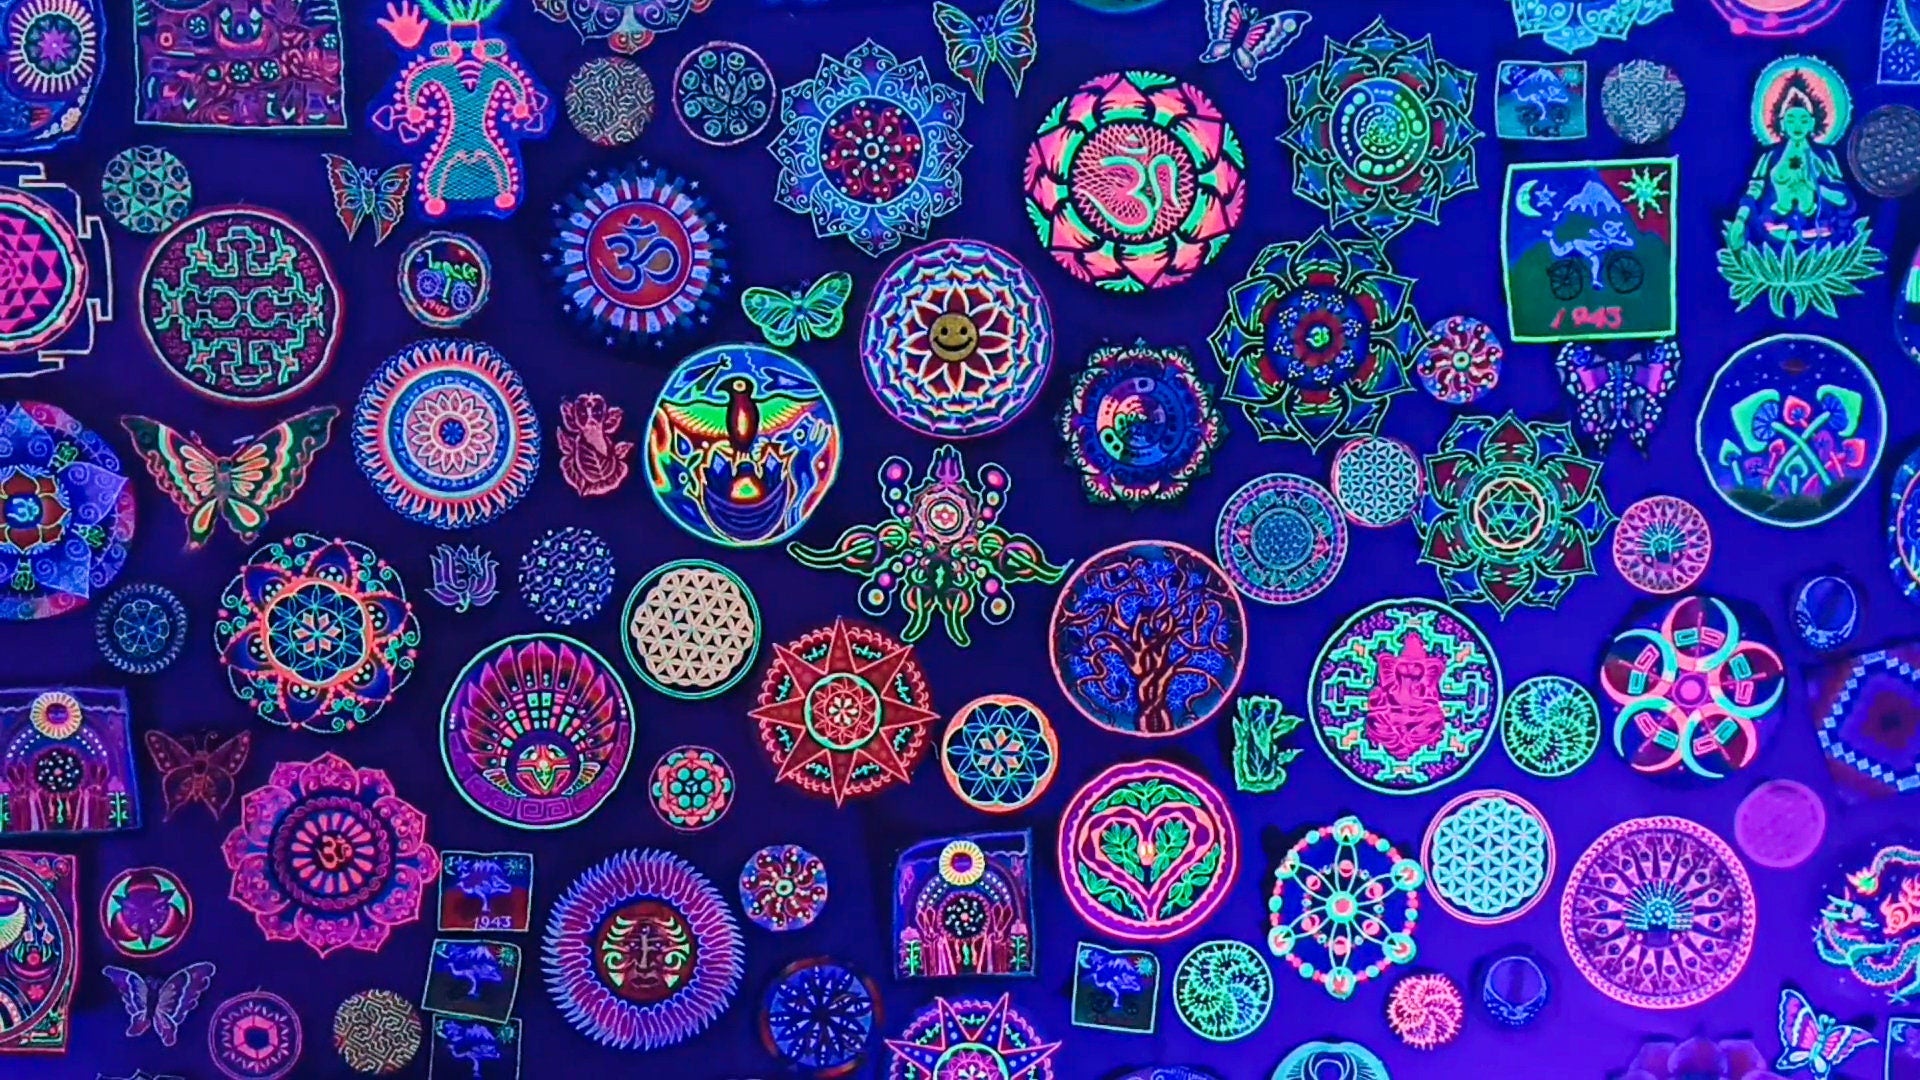 UV Blacklight AUM Embroidery Mandala Patch glowing cosmic music art Goa Trance Psychedelic OM Yantra fully neon shining xxl size